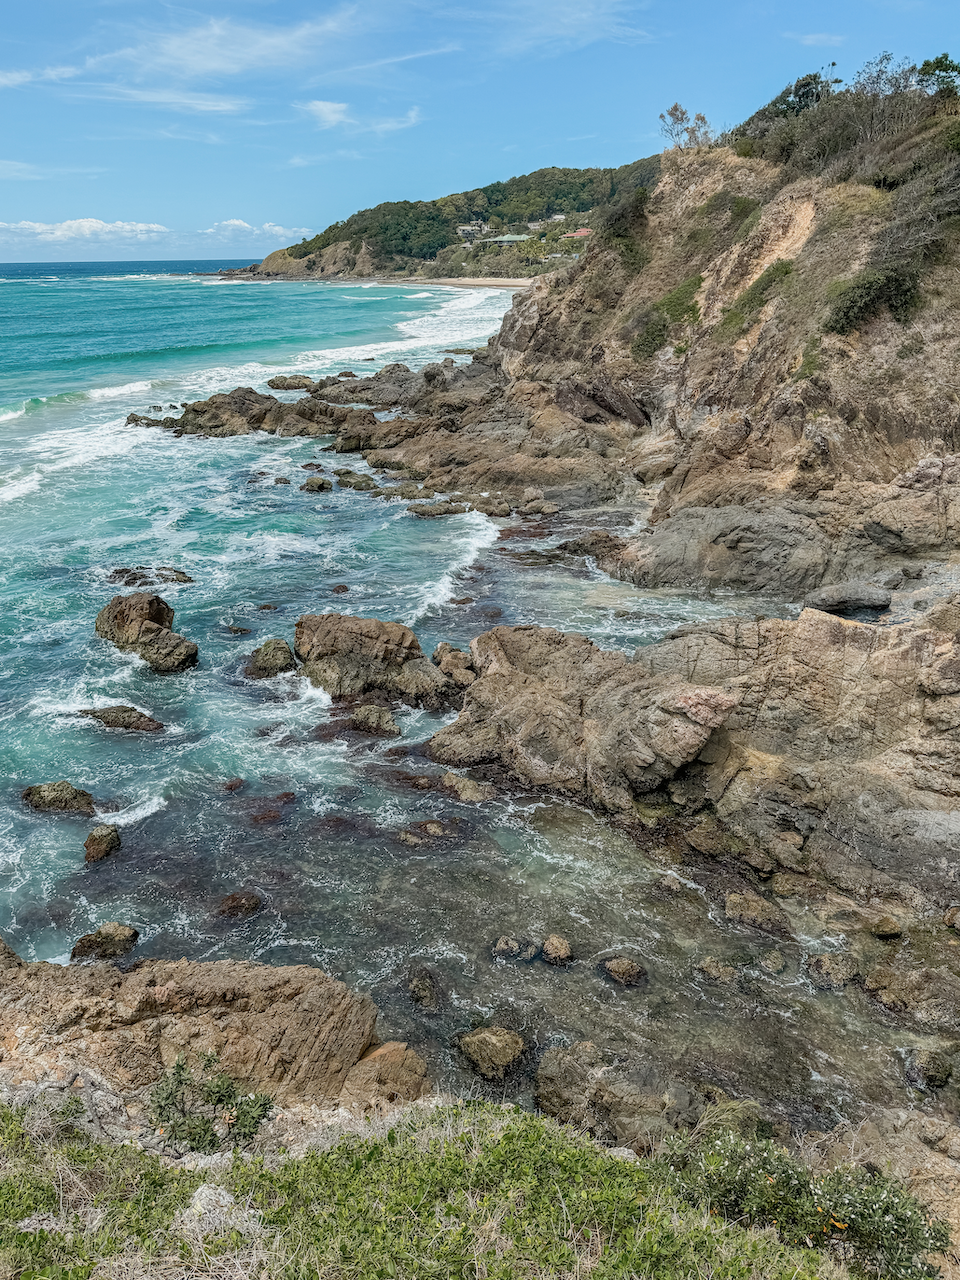 The scenic coast - Byron Bay - New South Wales - Australia